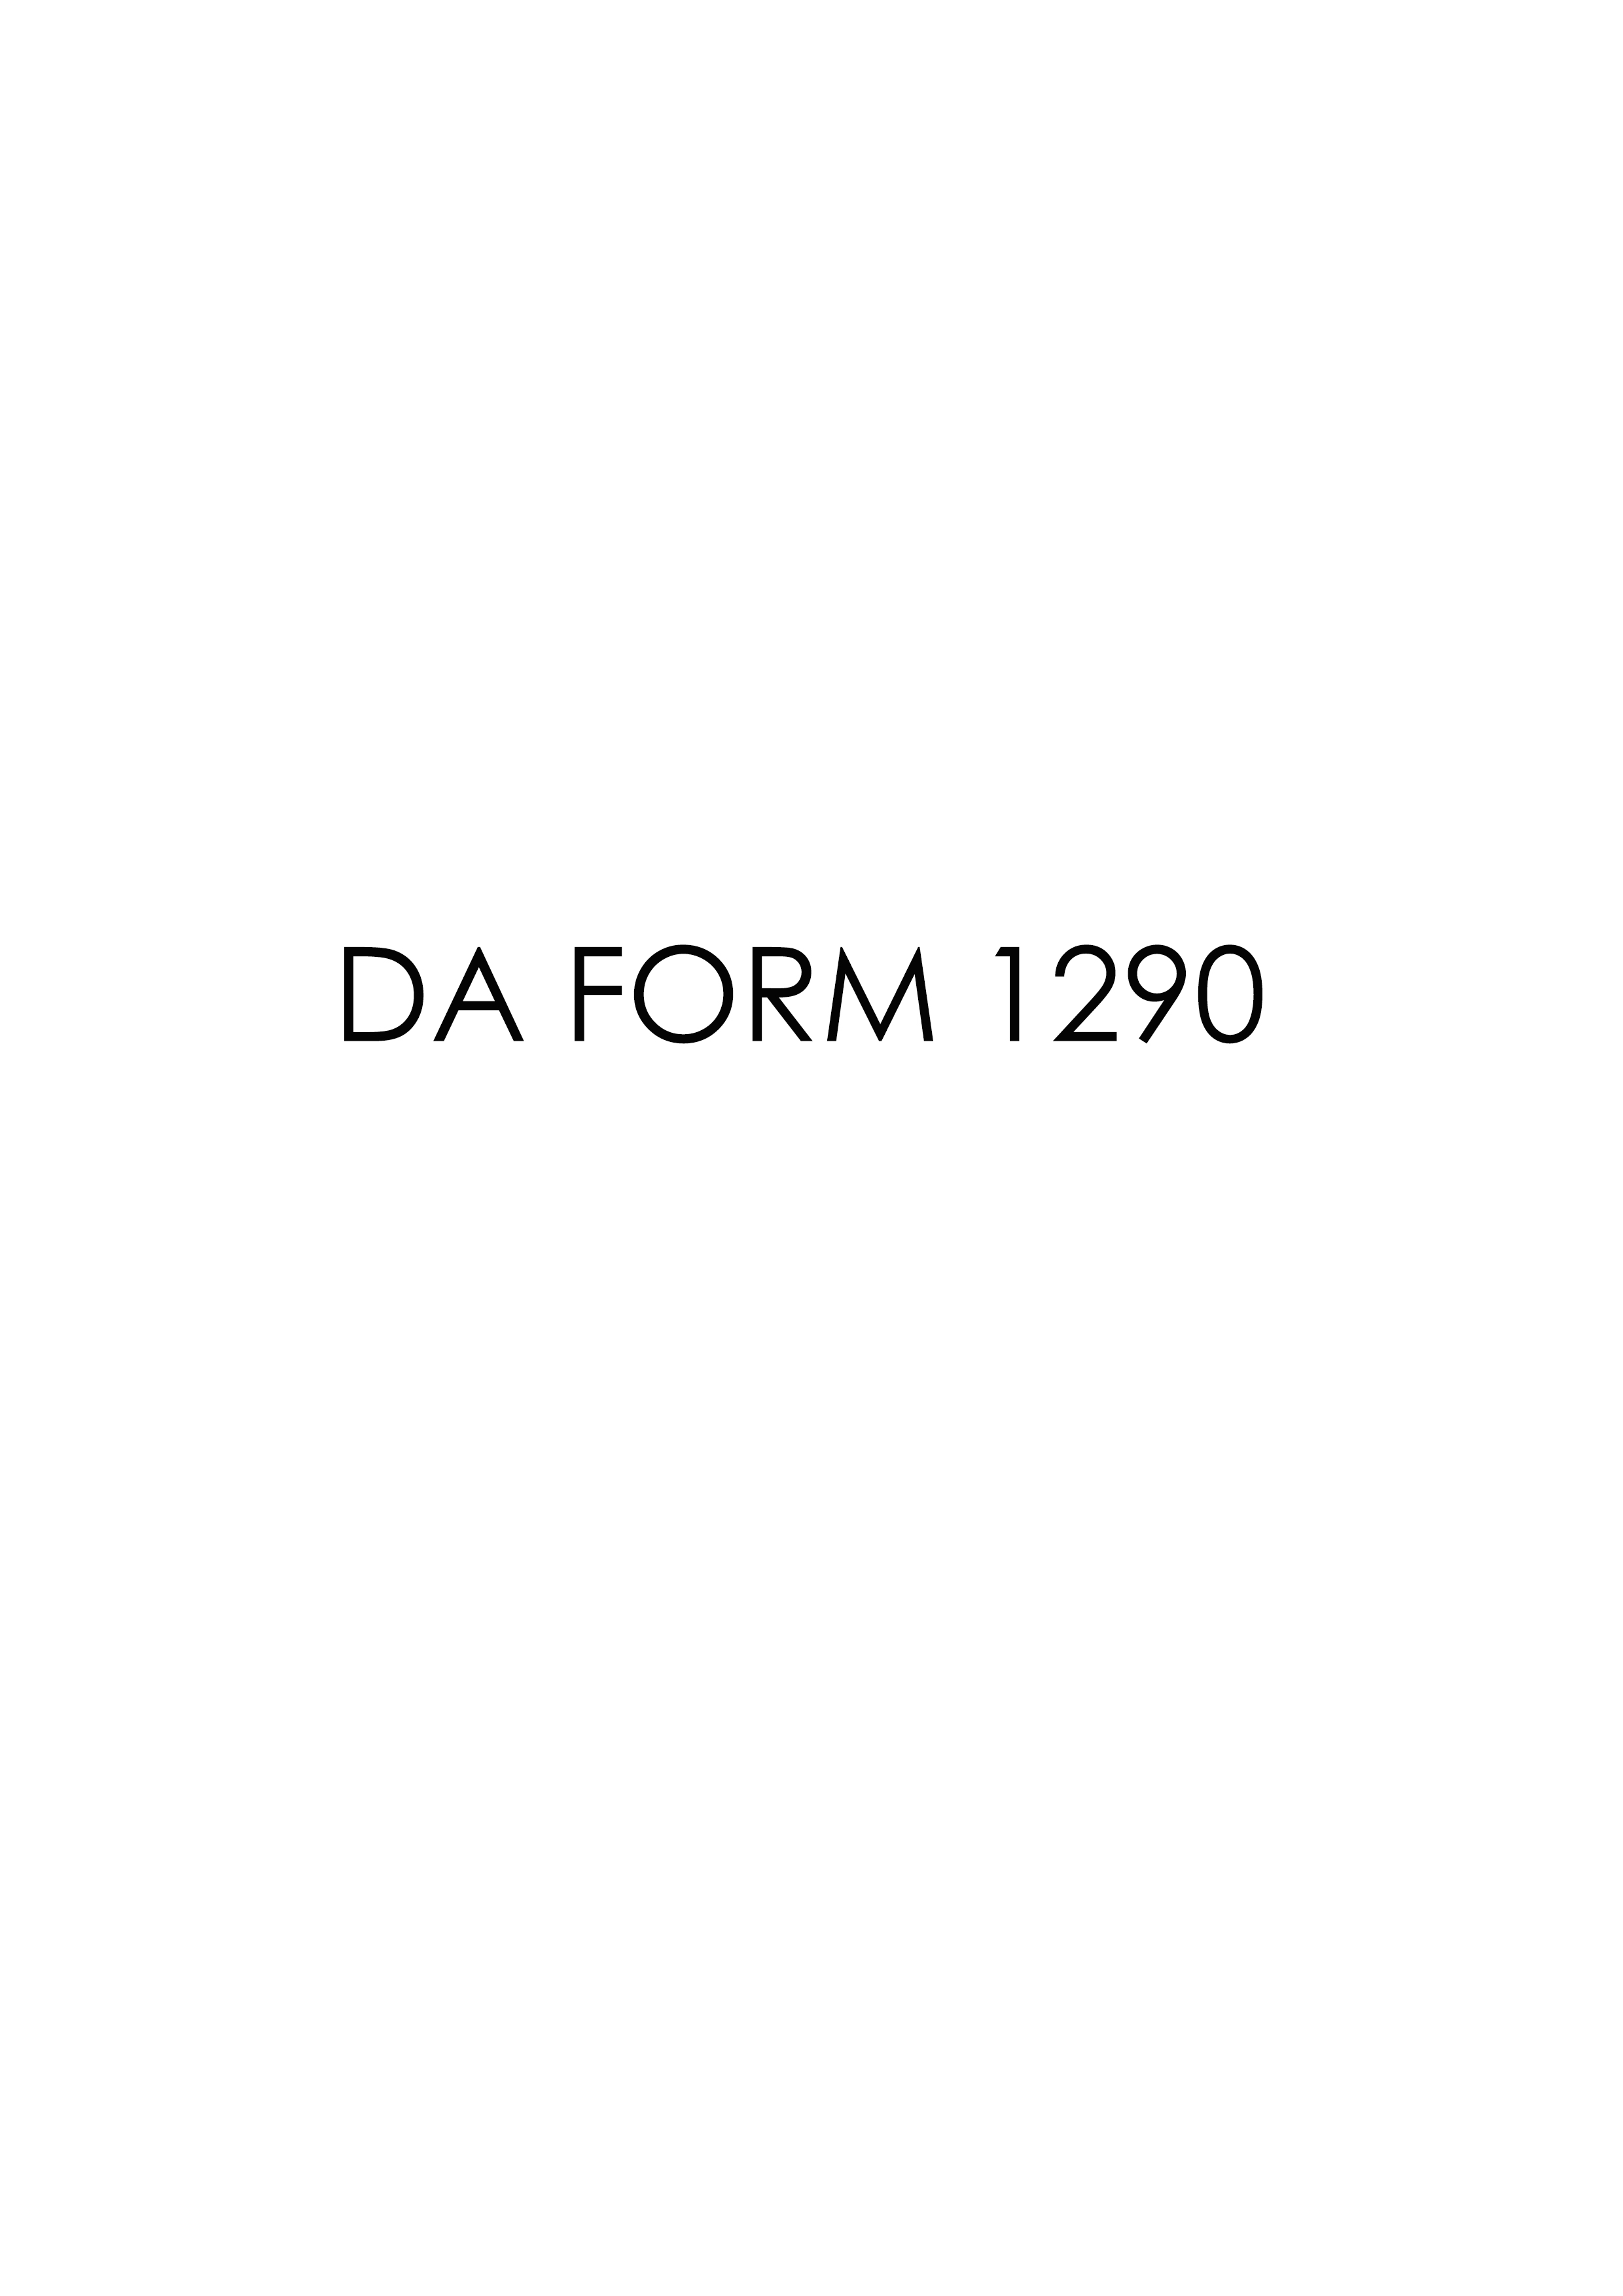 da Form 1290 fillable